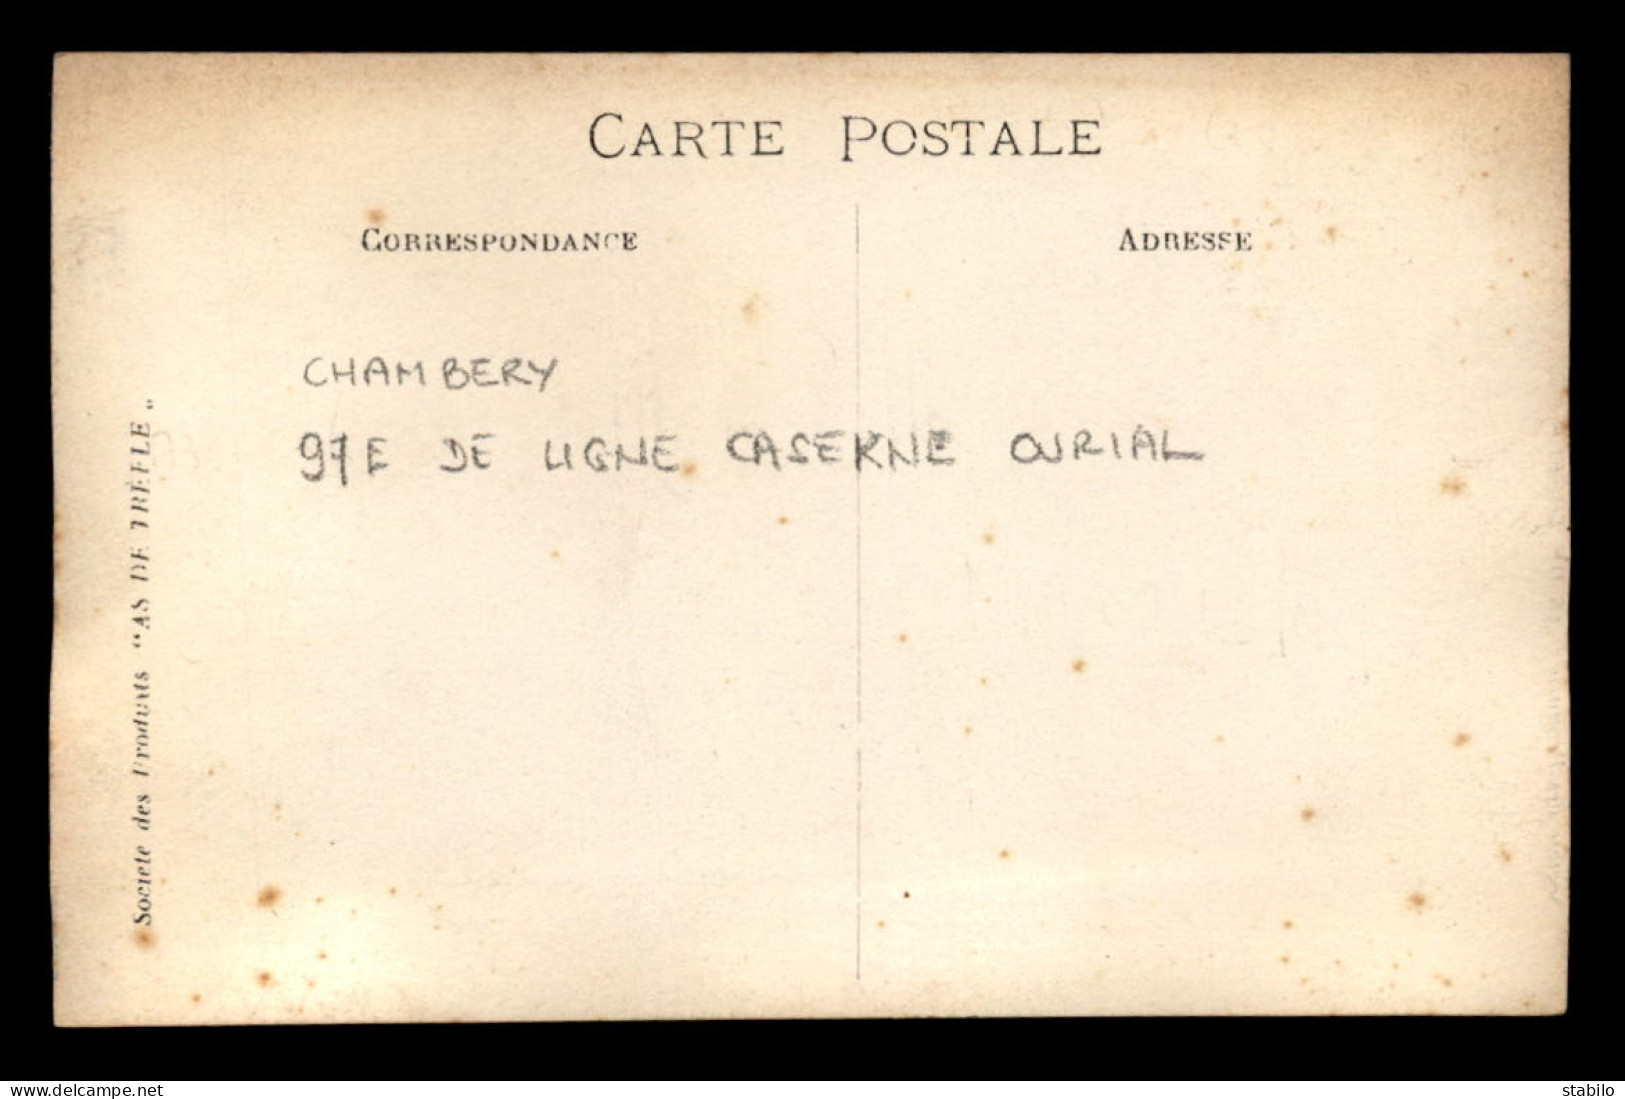 73 - CHAMBERY - 97E DE LIGNE  - CASERNE CURIAL - CARTE PHOTO ORIGINALE - Chambery